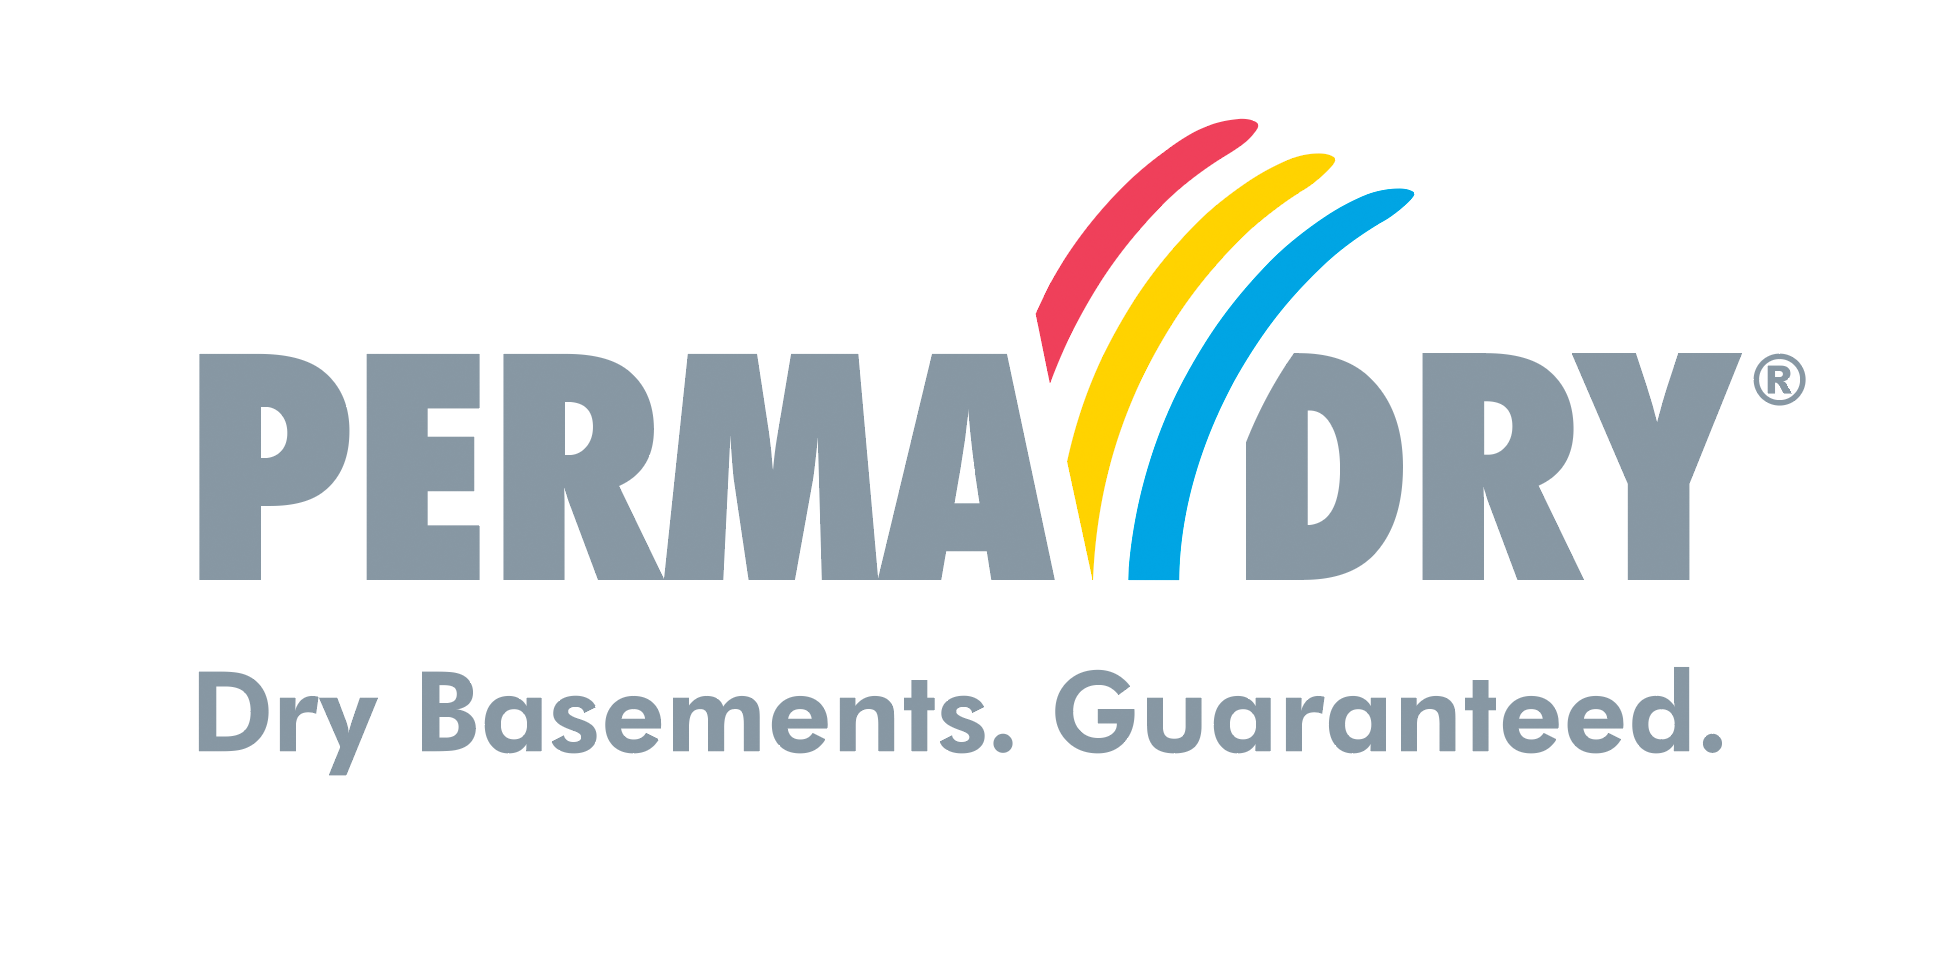 PERMA-DRY® - Dry Basements. Guaranteed